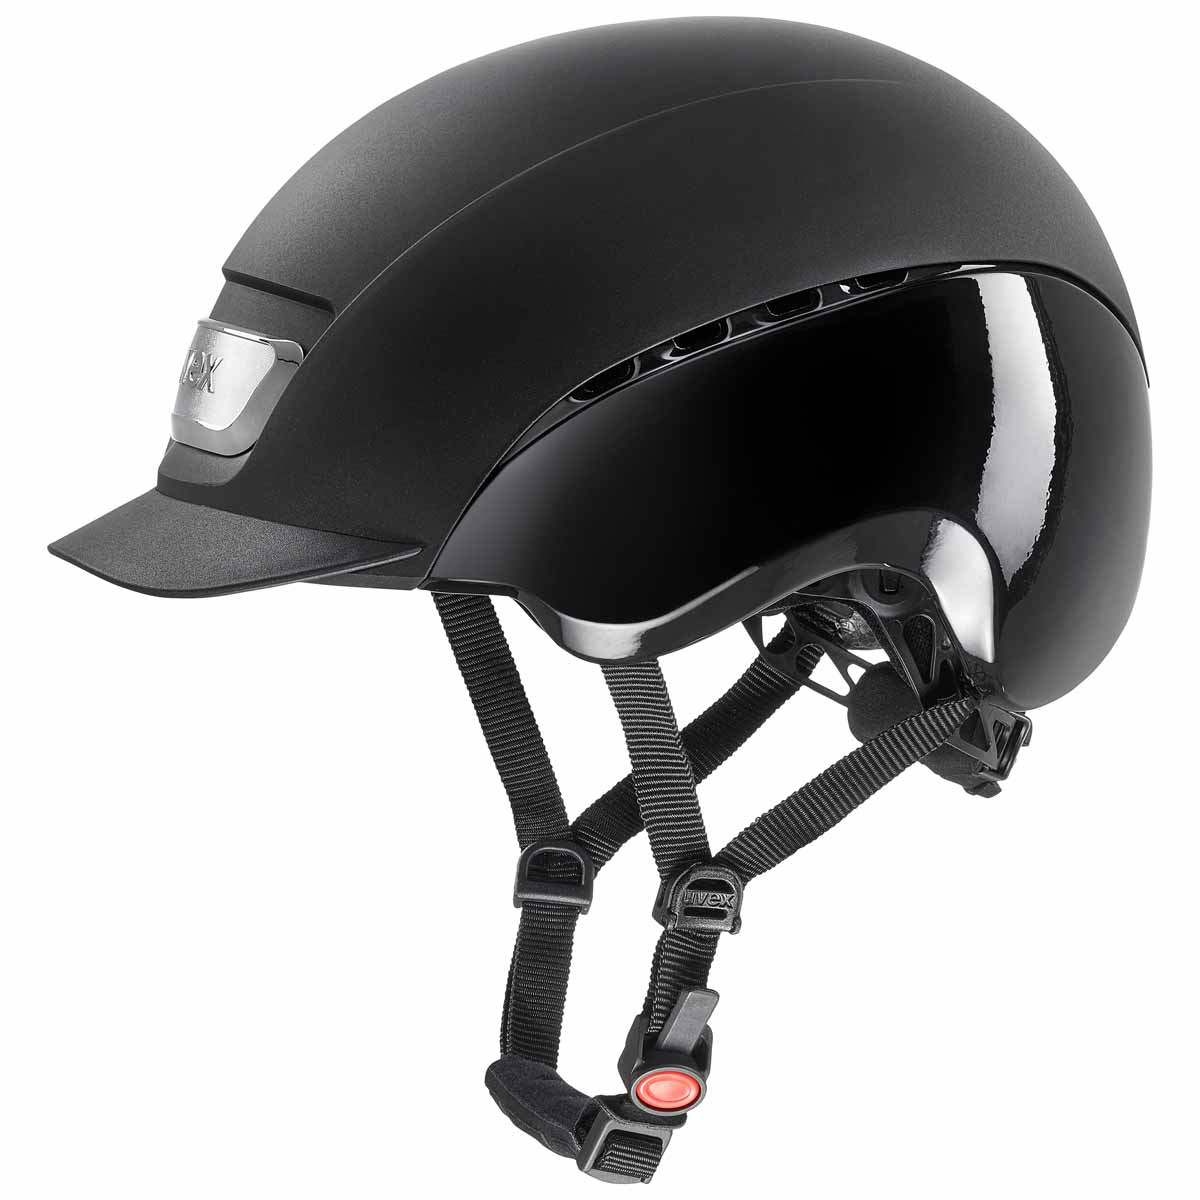 uvex elexxion pro riding helmet blue mat-shiny S